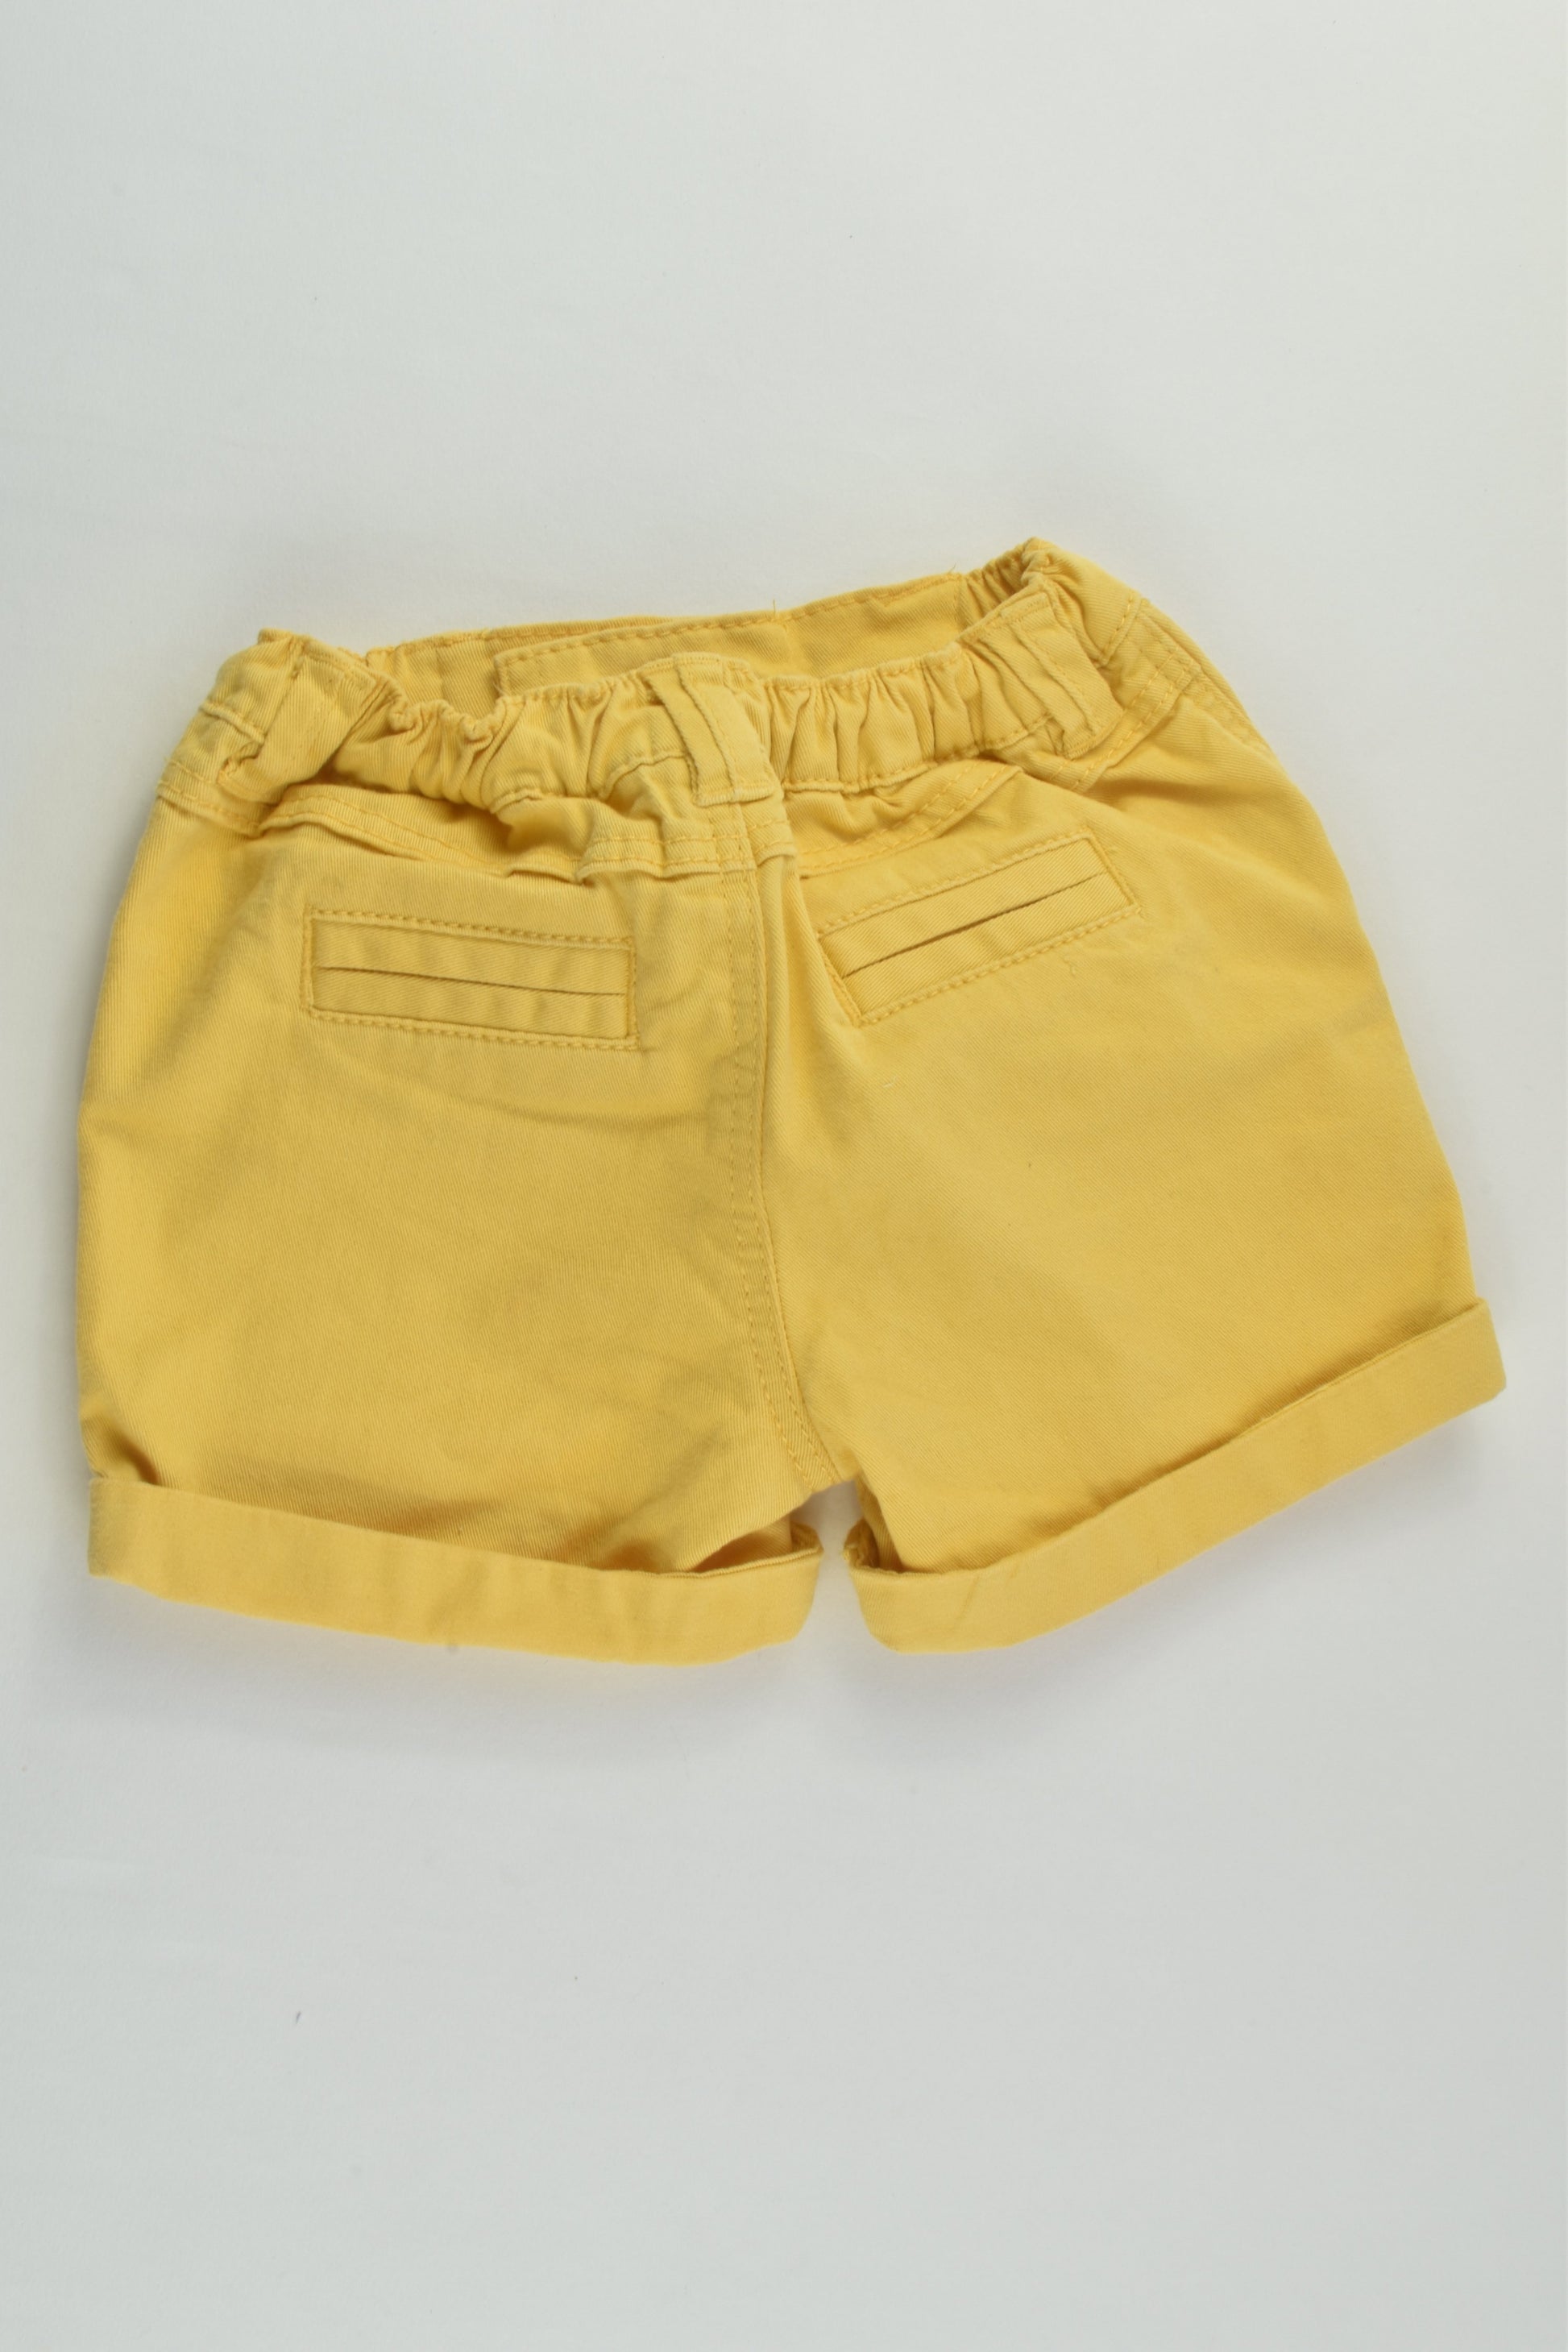 TU Size 00 (3-6 months) Shorts